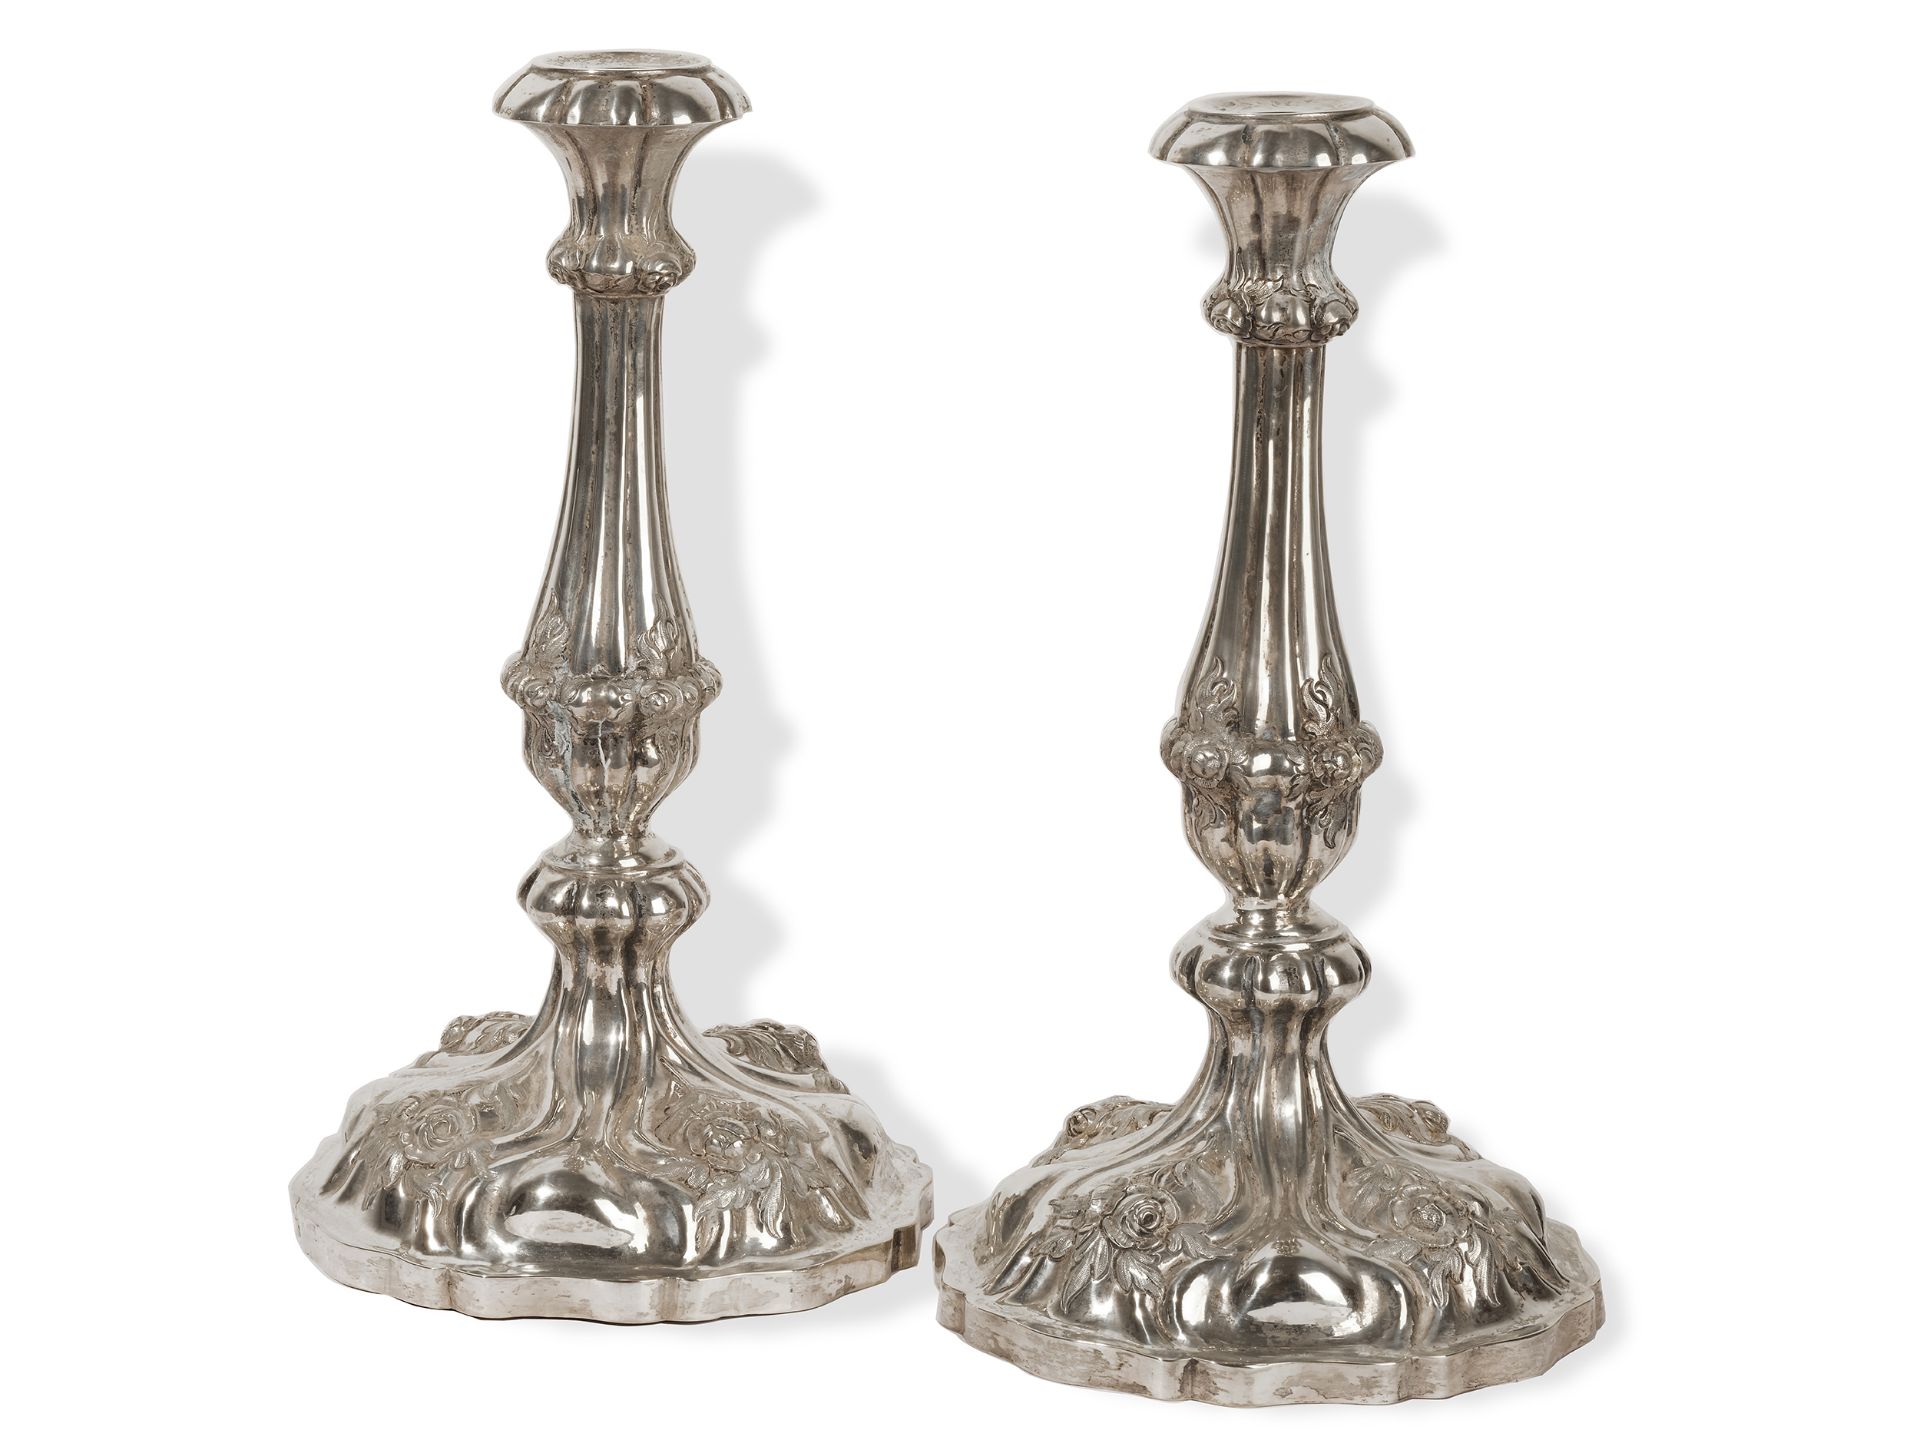 Pair of representative candlesticks, 
"Alt Wien" silver, 
Ca. 1850